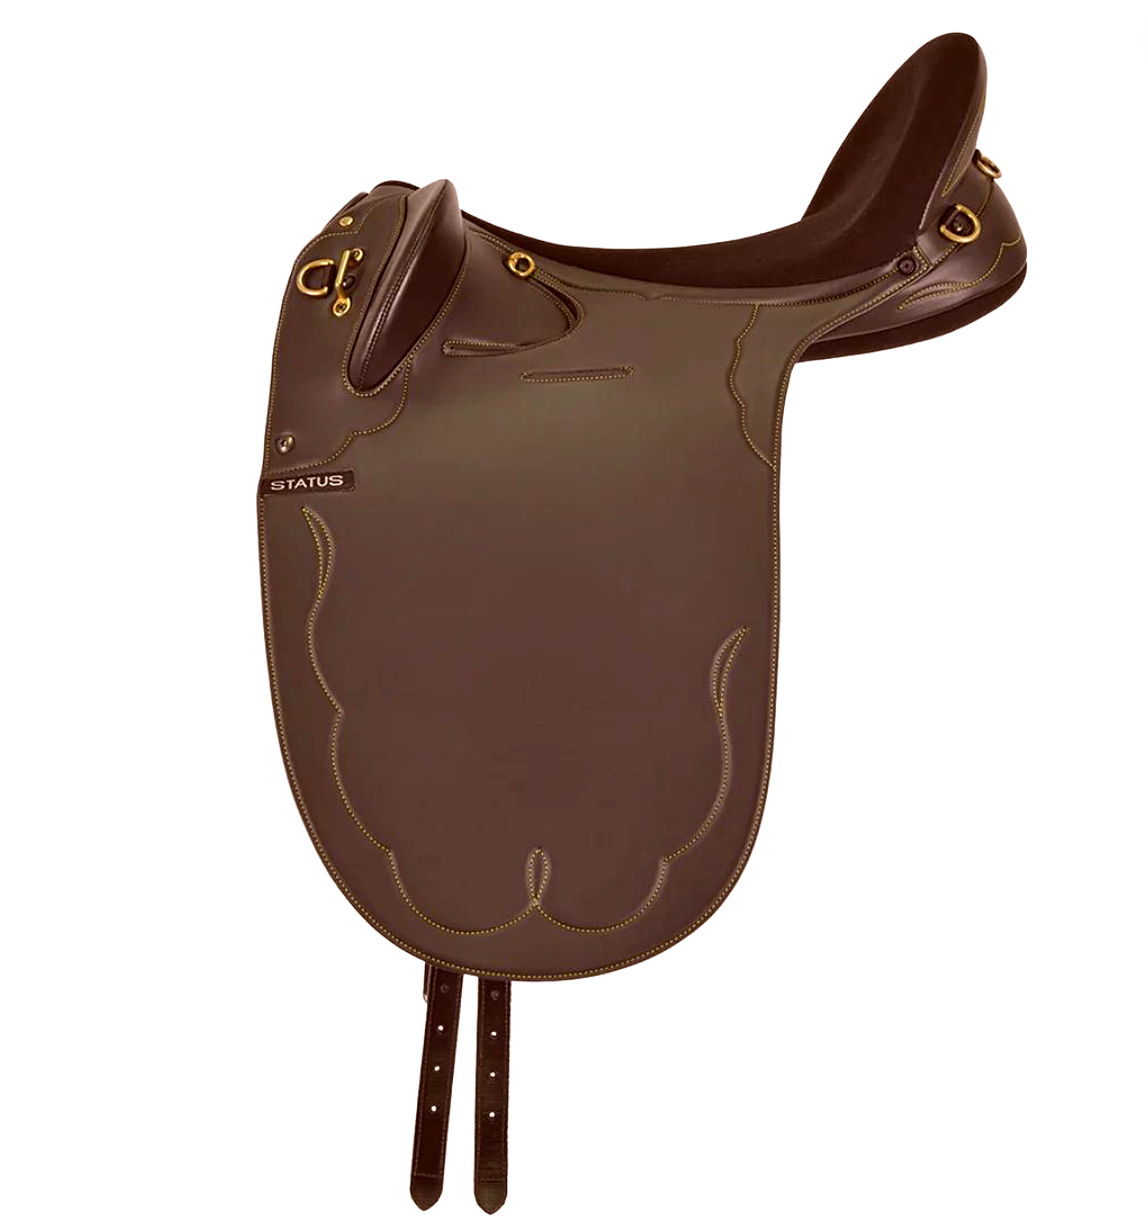 status stock saddle brown